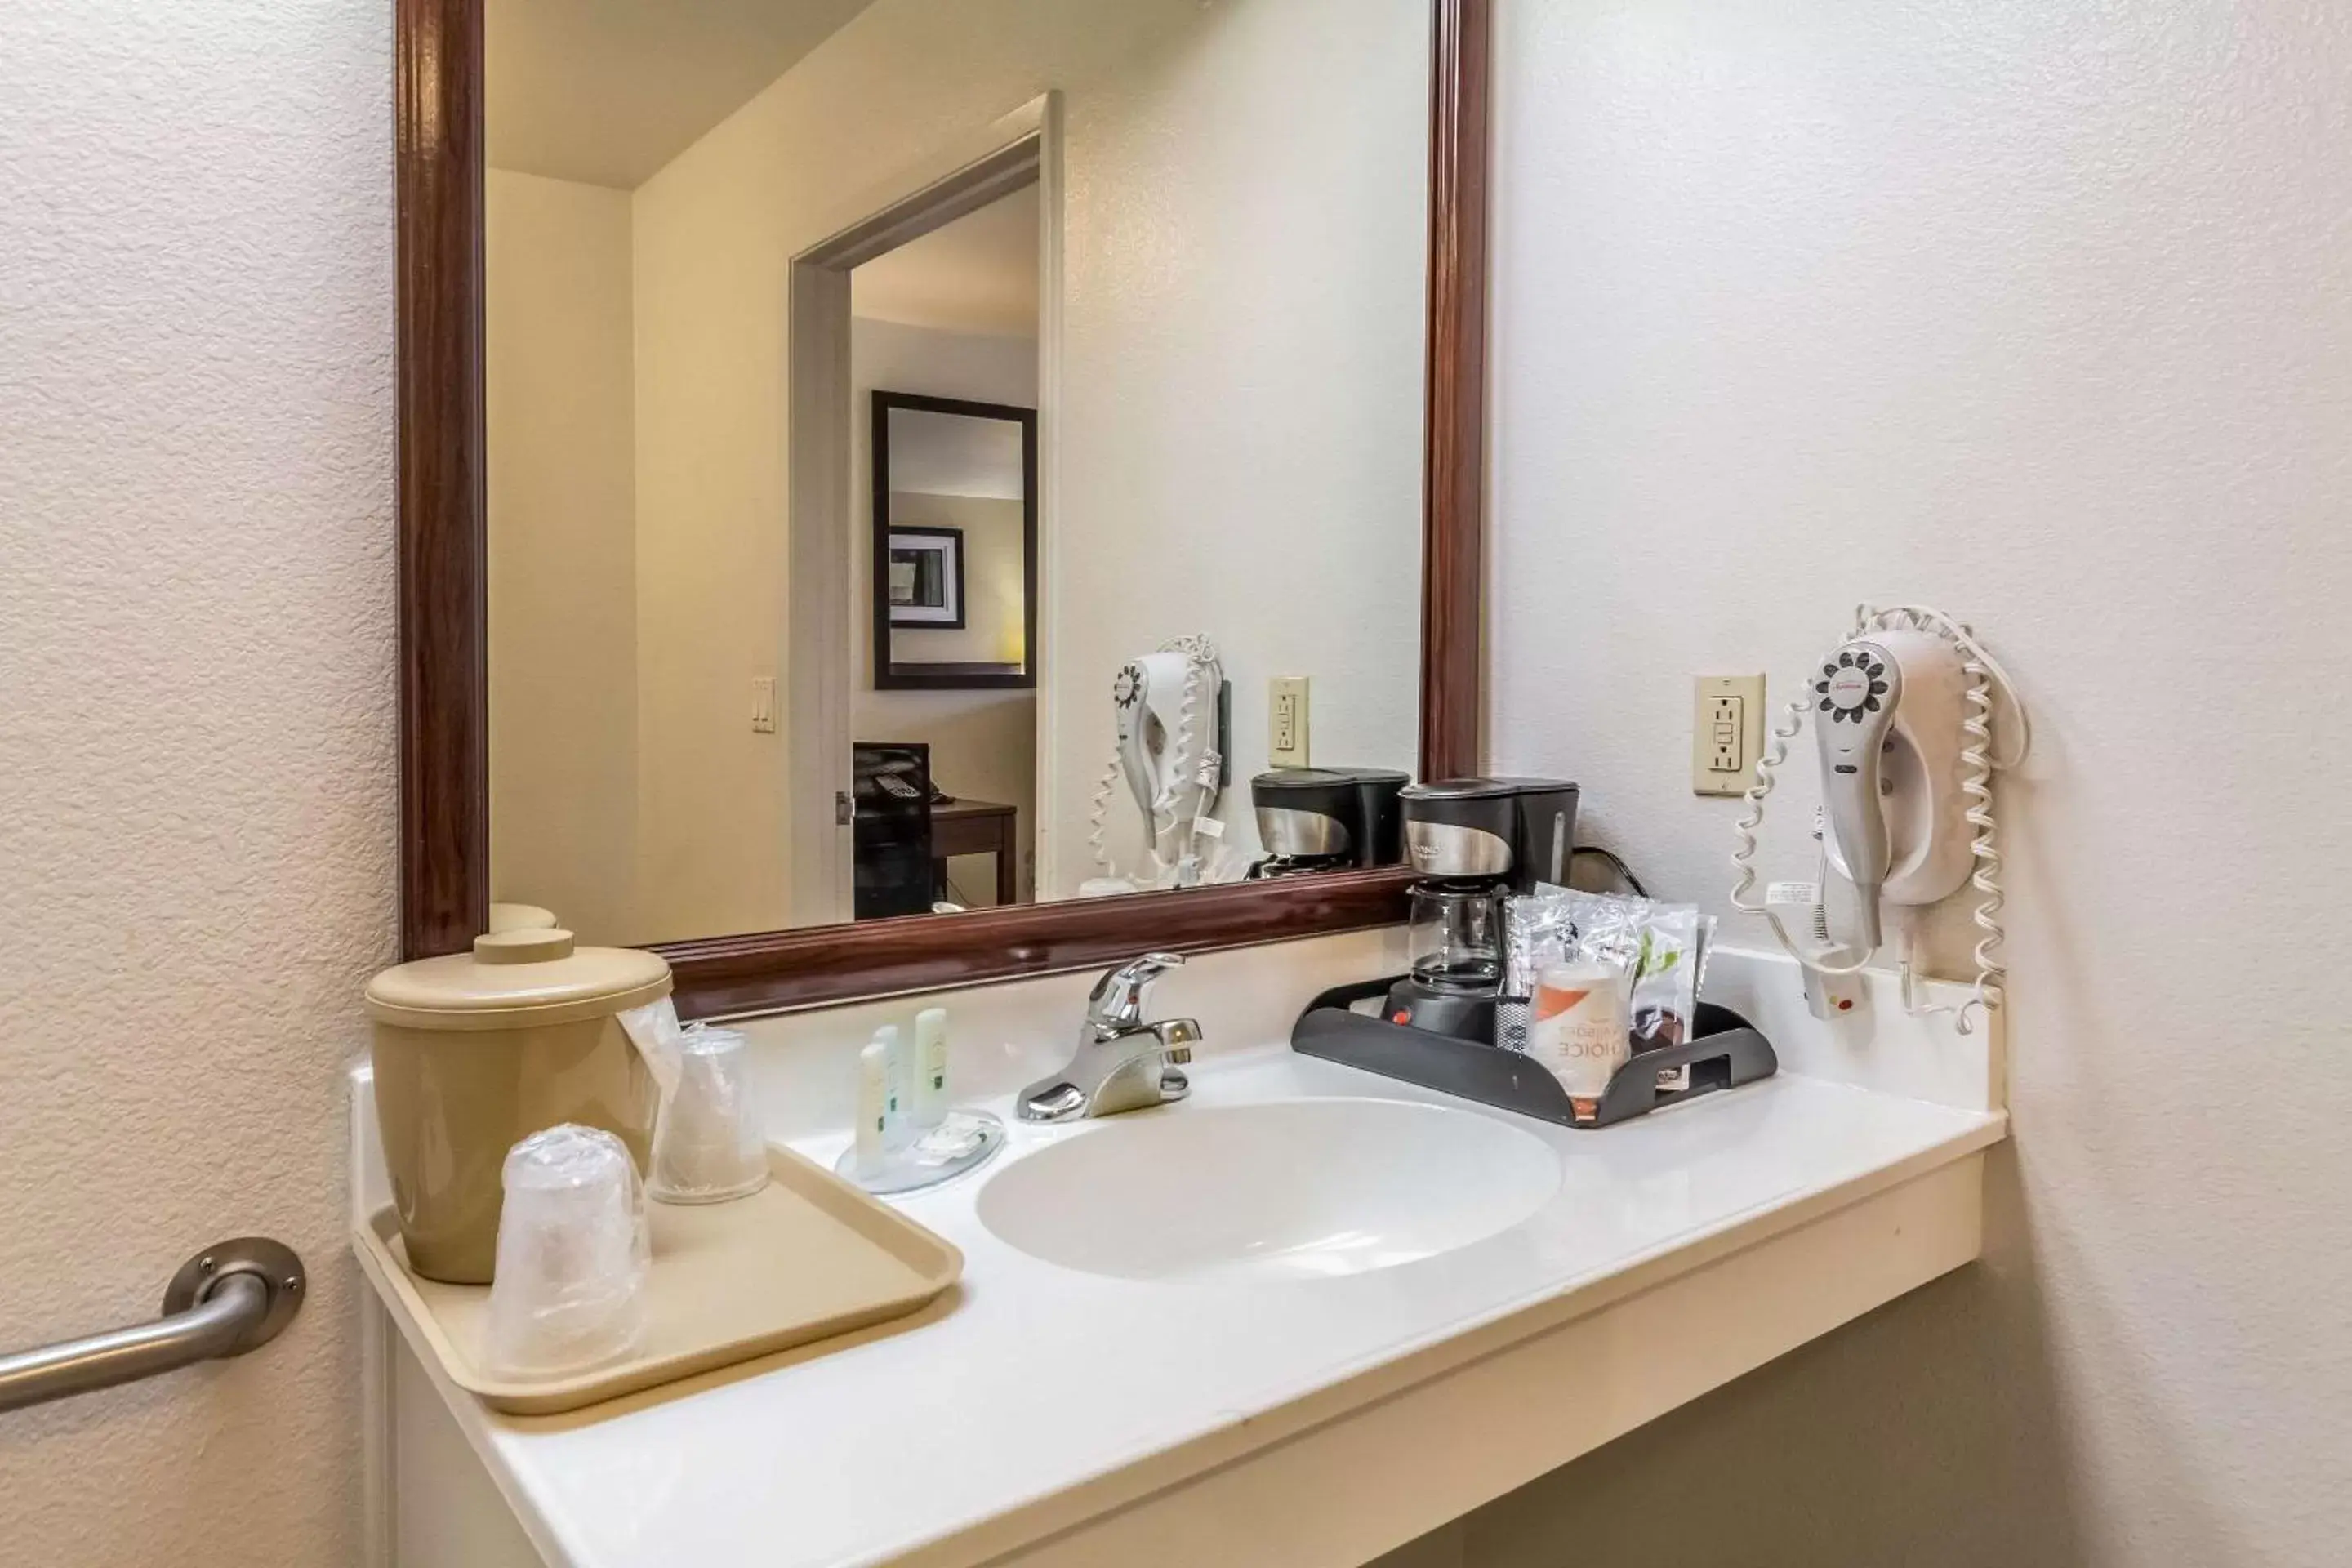 Photo of the whole room, Bathroom in Quality Inn Fresno Near University